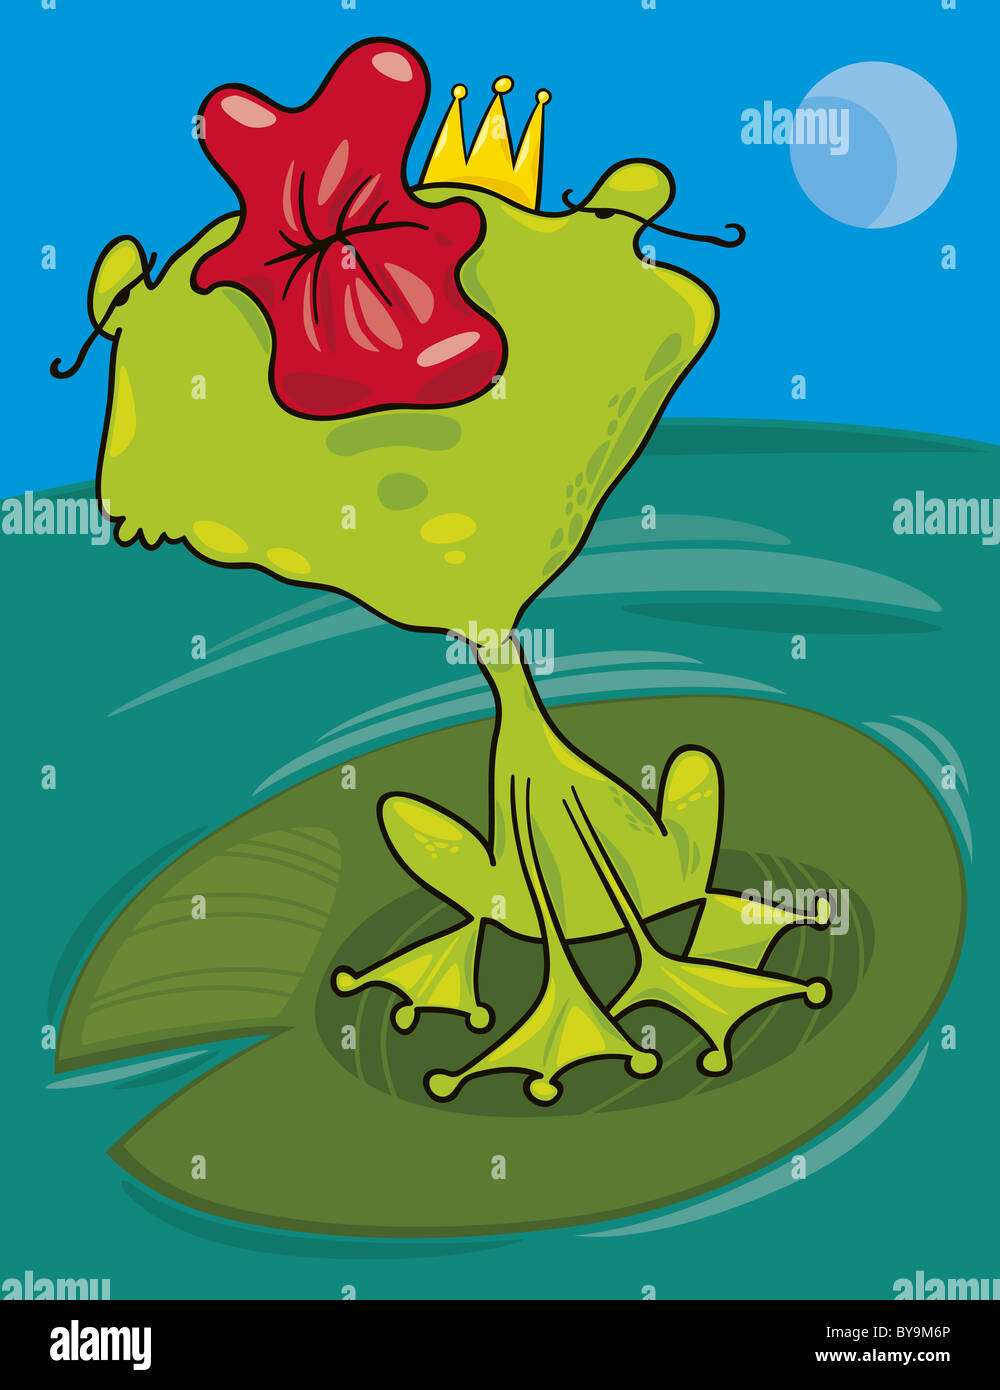 cartoon illustration of funny prince frog kiss Stock Photo